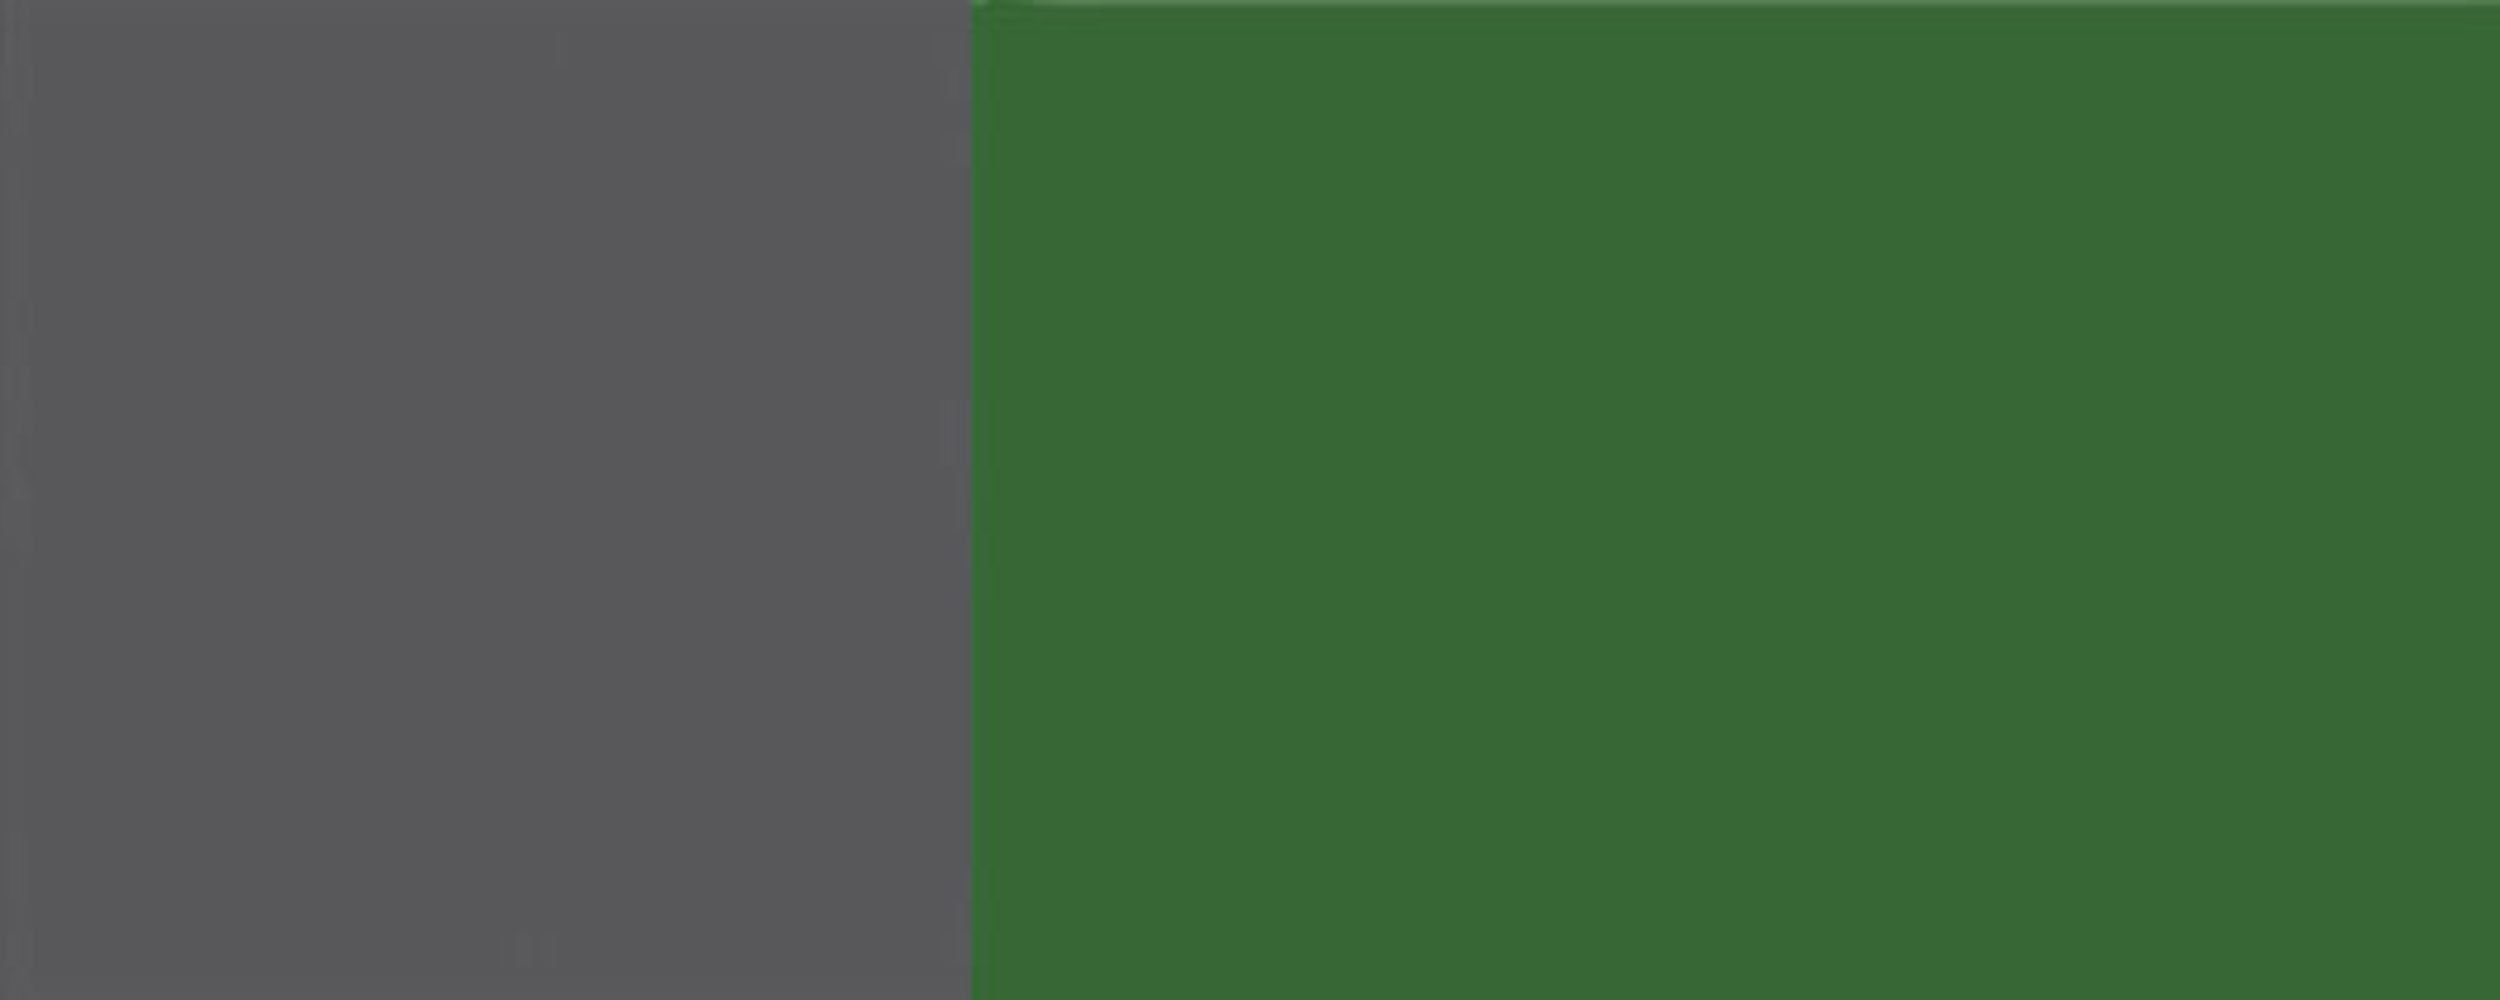 smaragdgrün Florence Klapphängeschrank grifflos RAL wählbar Feldmann-Wohnen 6001 80cm Hochglanz (Florence) Front- Korpusfarbe 2-türig und